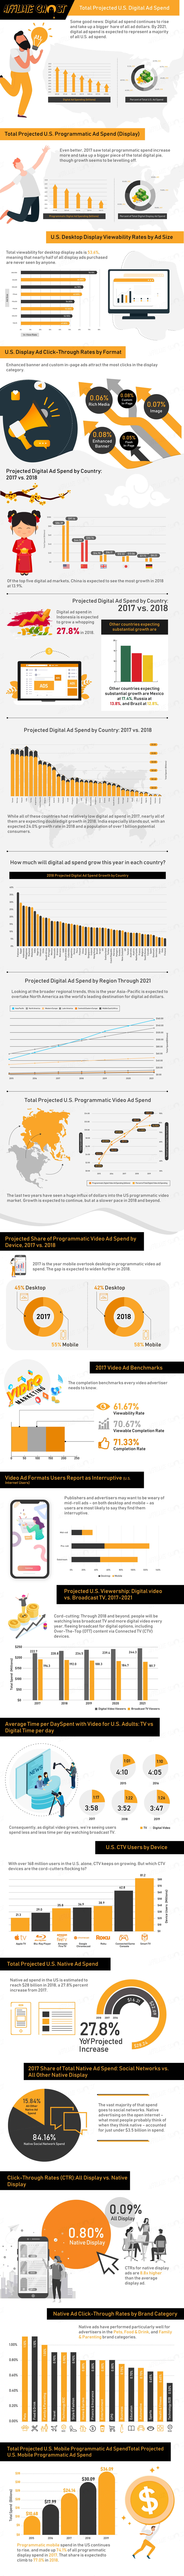 Digital Advertising Statistics that Rock The Web (Infographic 2020)